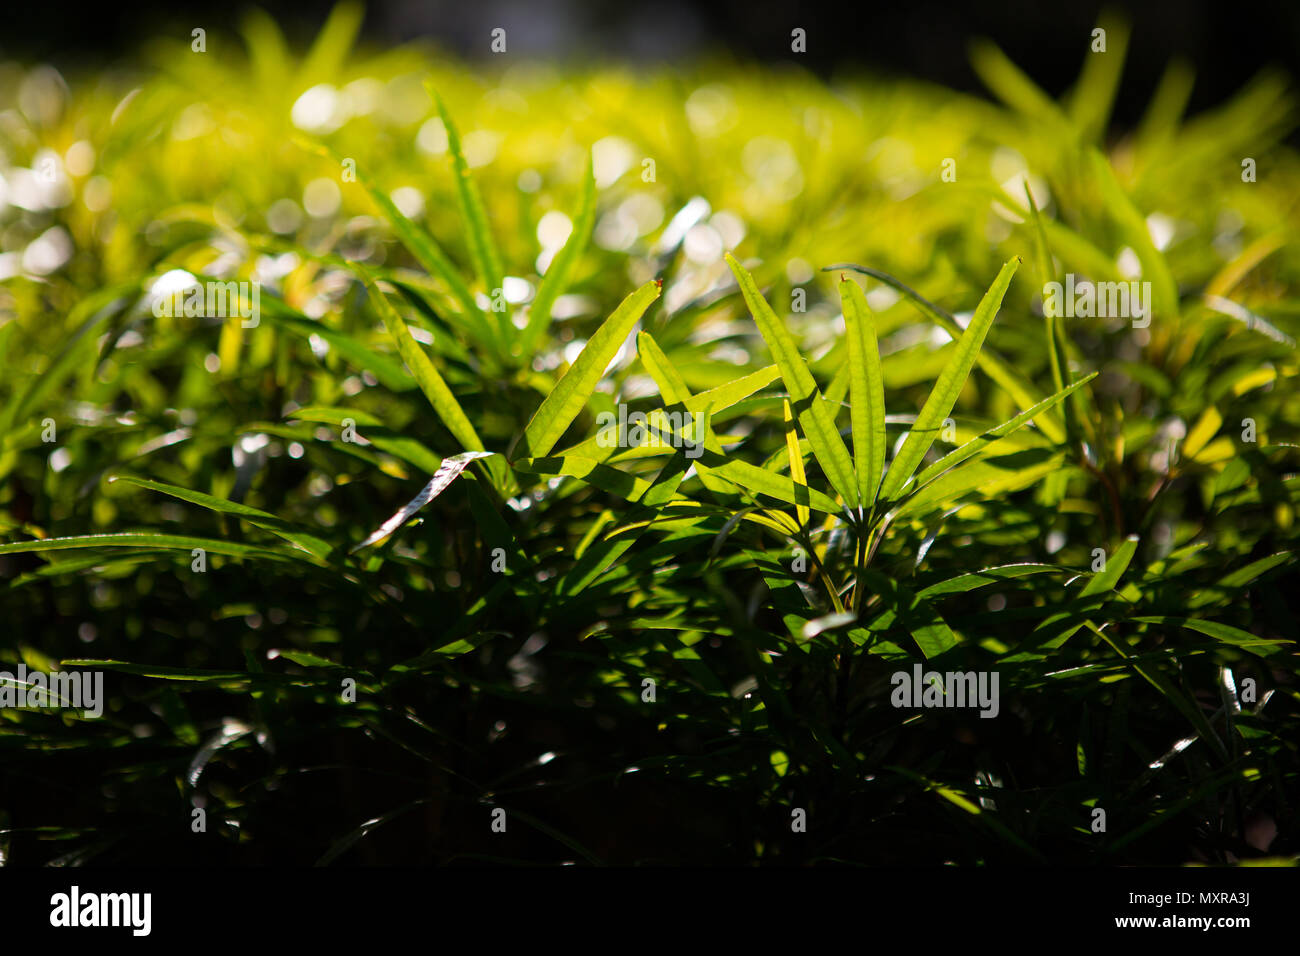 Bush grass backlight Stock Photo